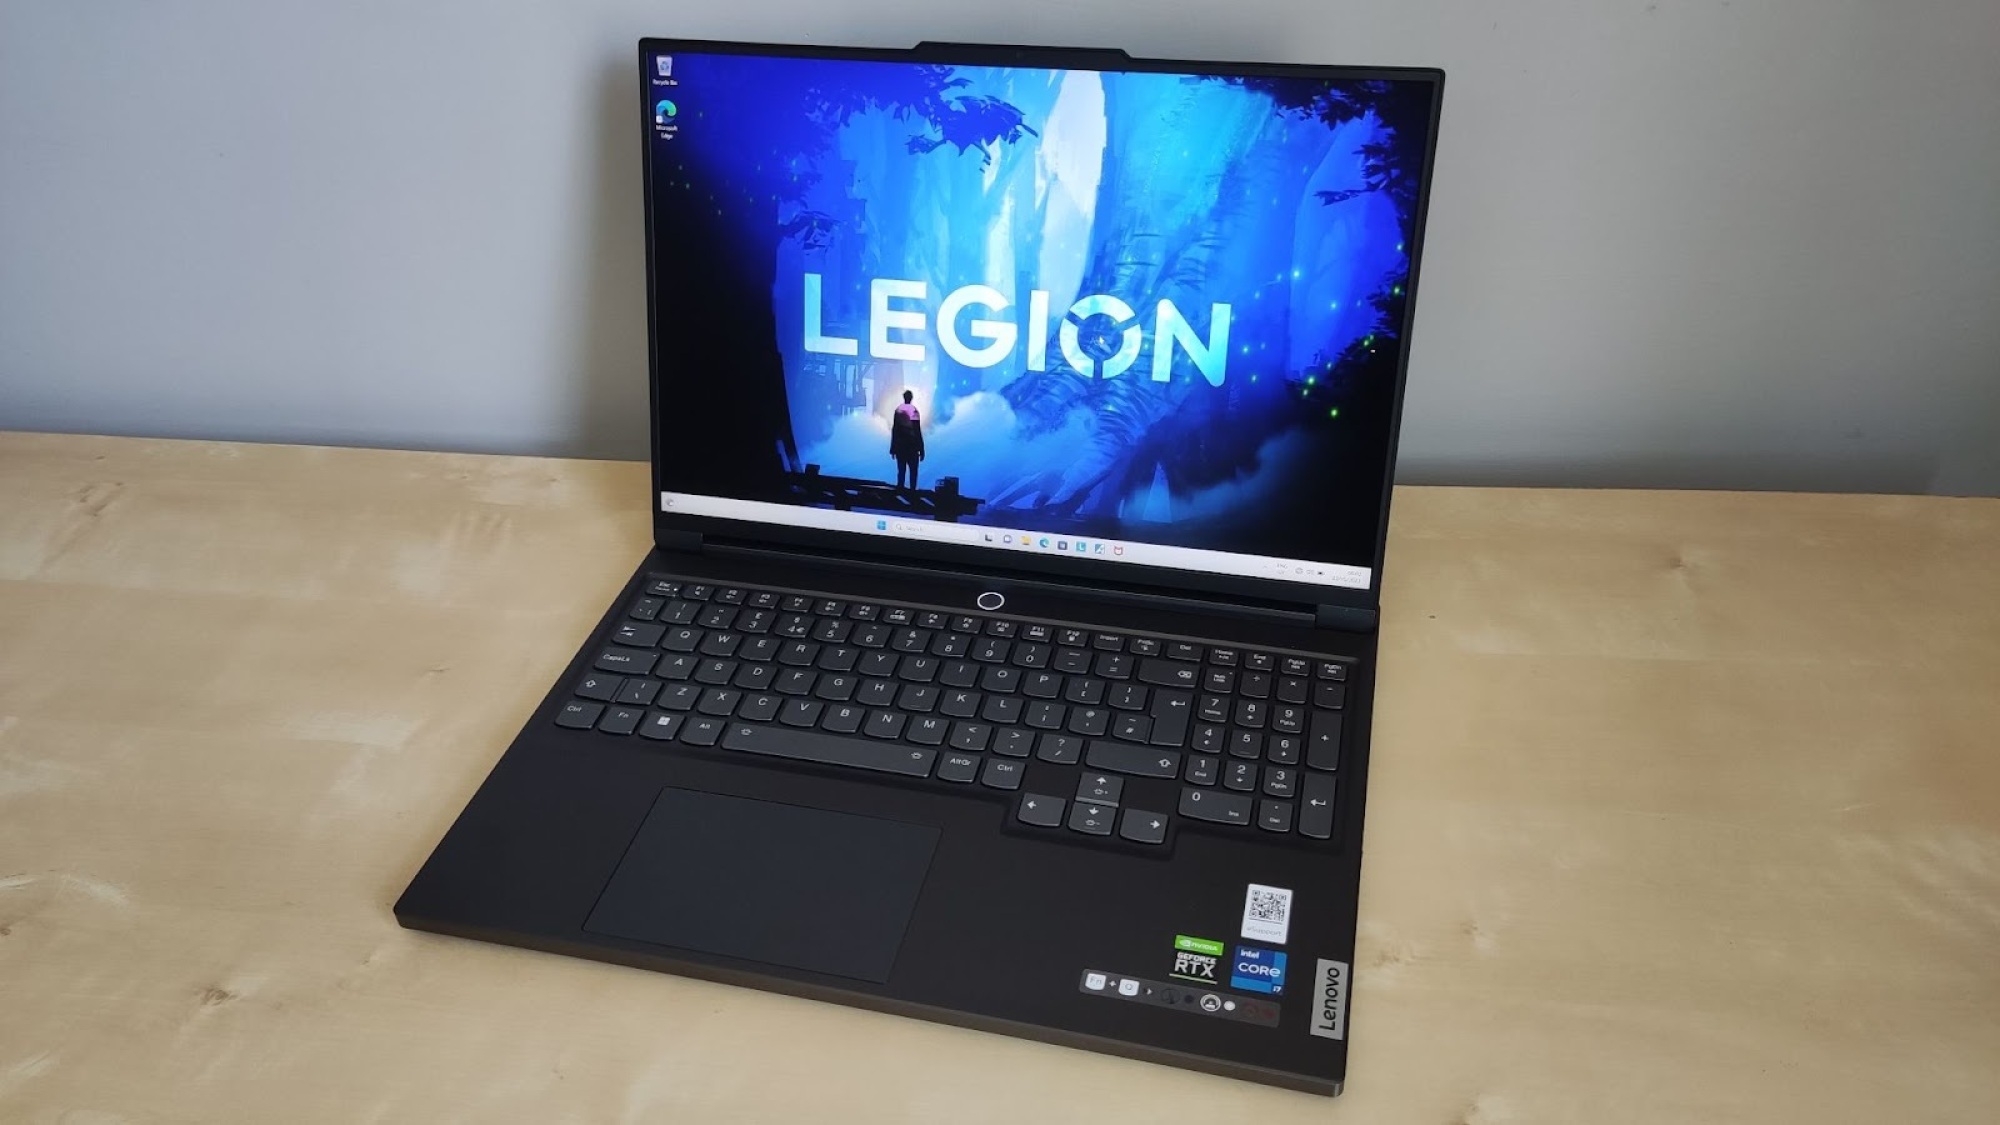 Lenovo Legion gaming laptop on desk with “LEGION” on screen